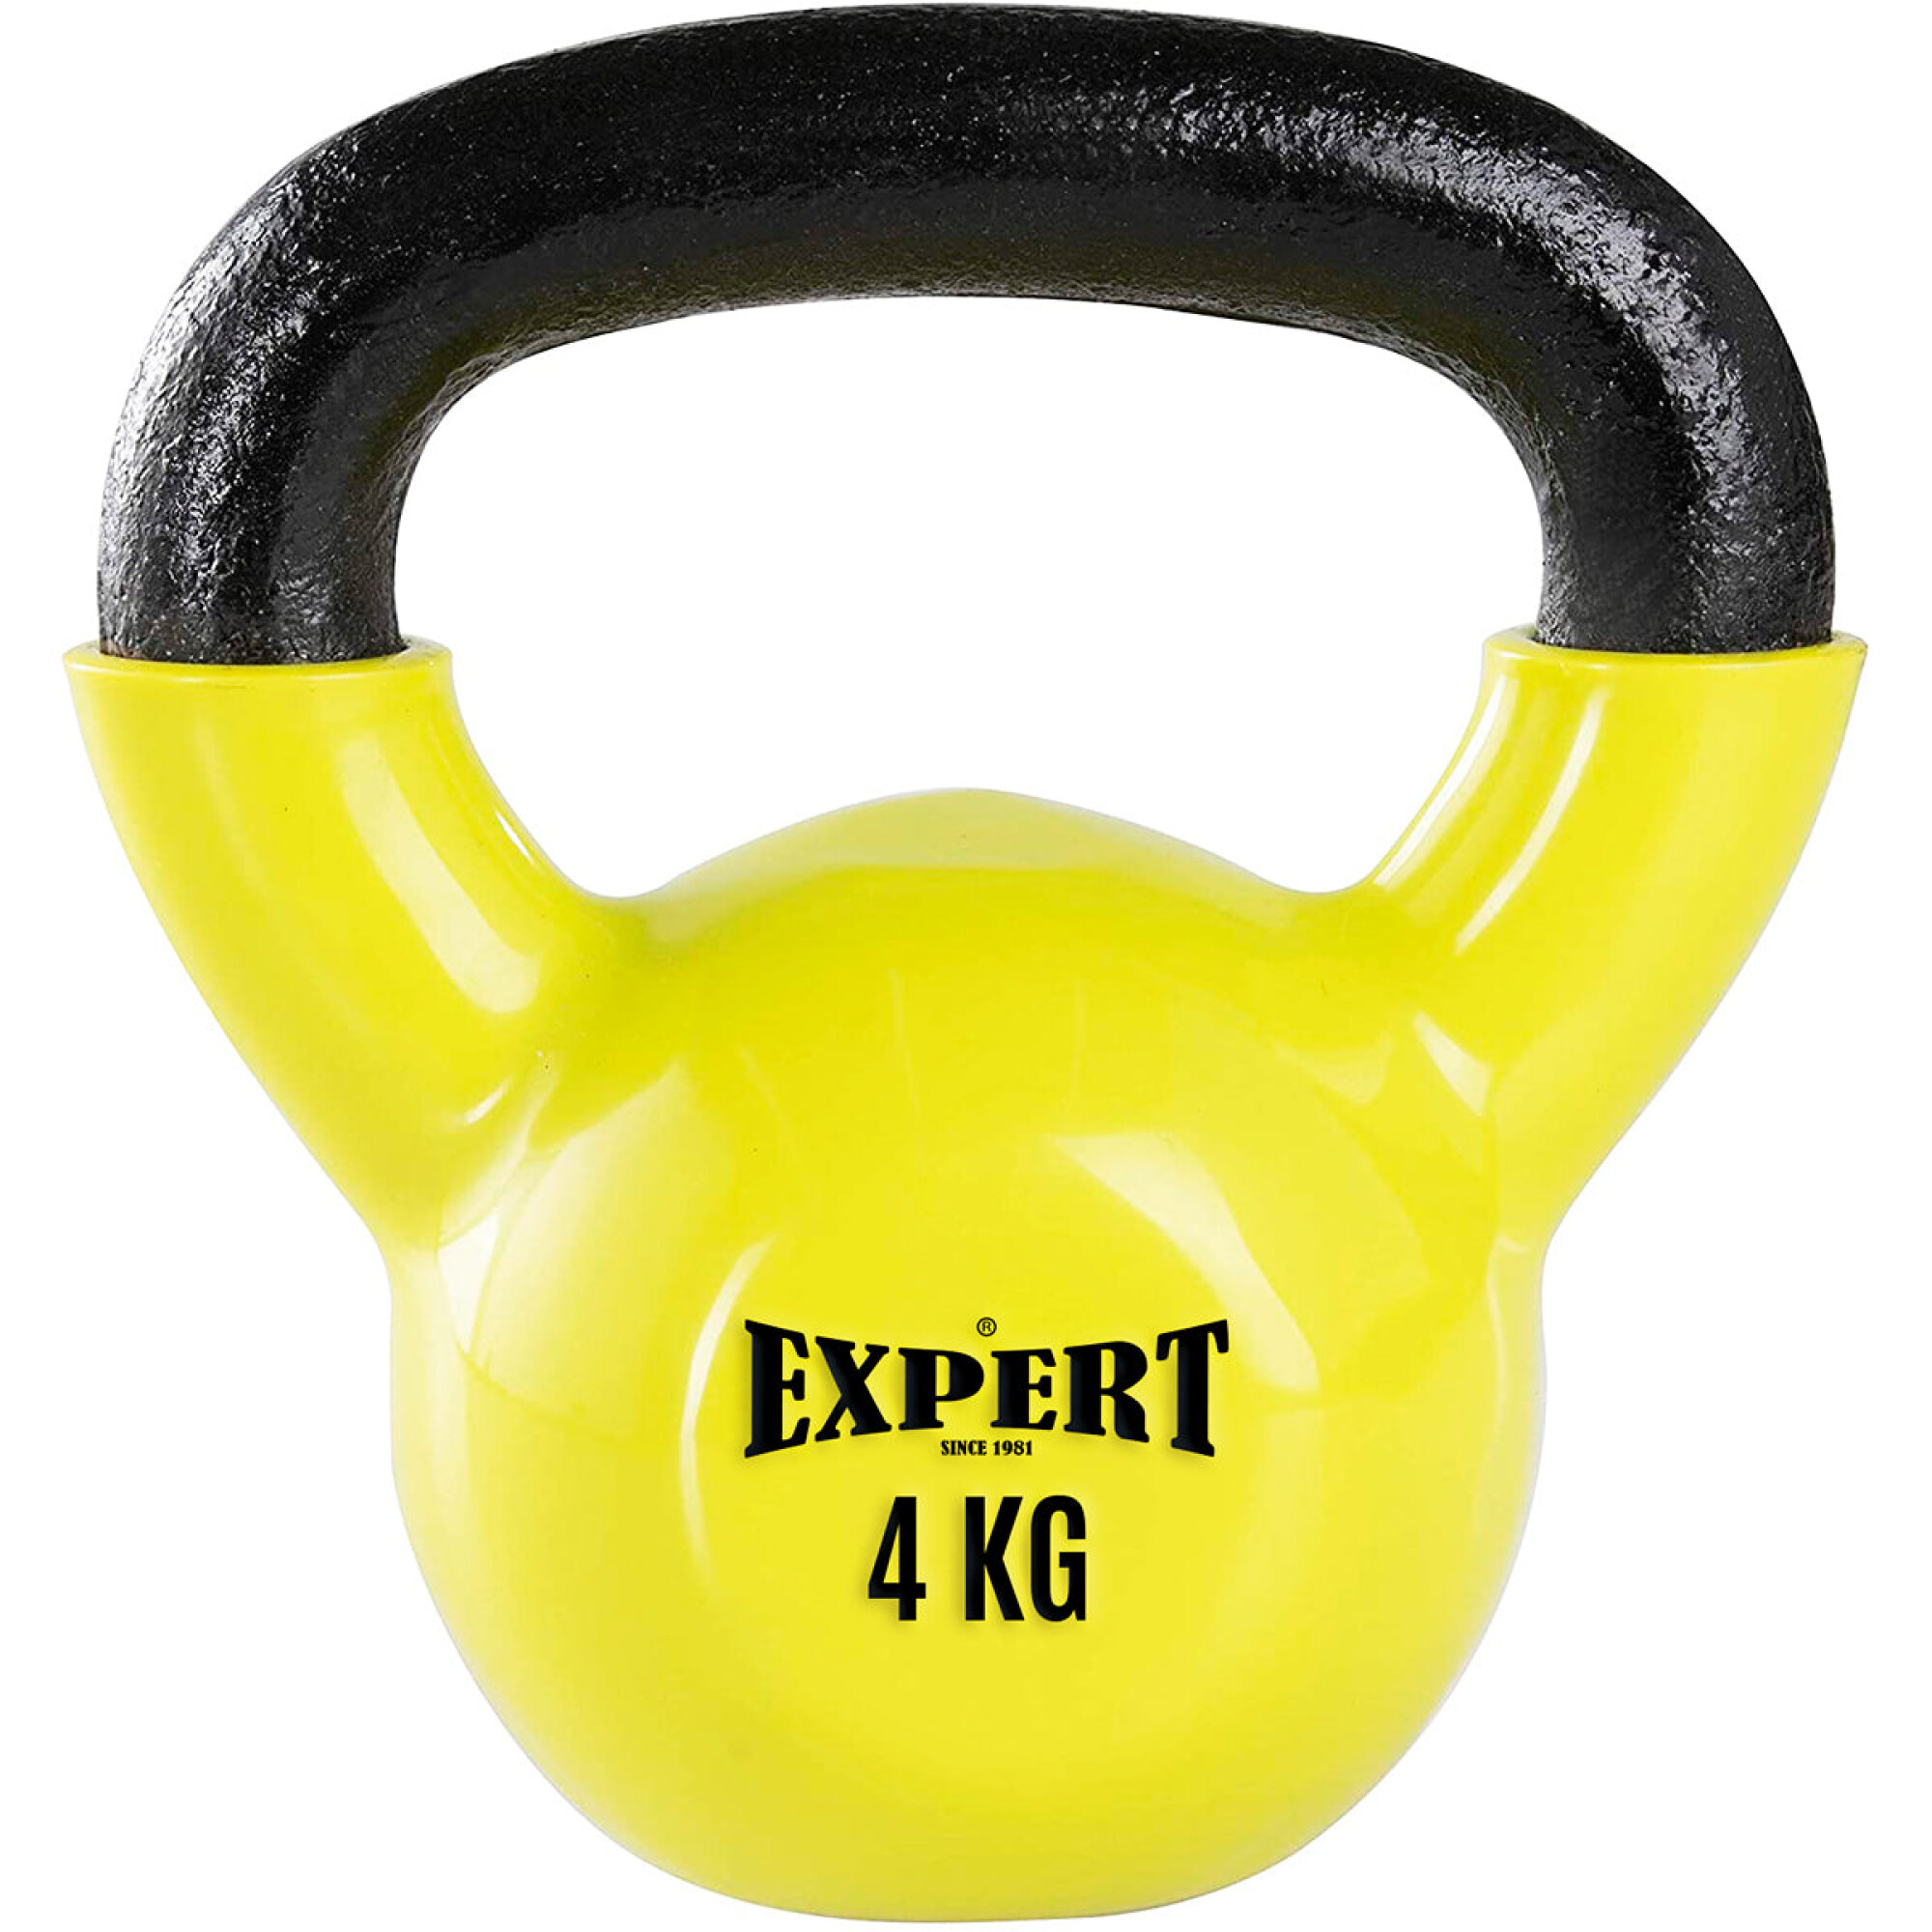 Pesa Rusa 24kg Sporfitness Kettlebell Hierro Ejercicio Gym - Fitshop